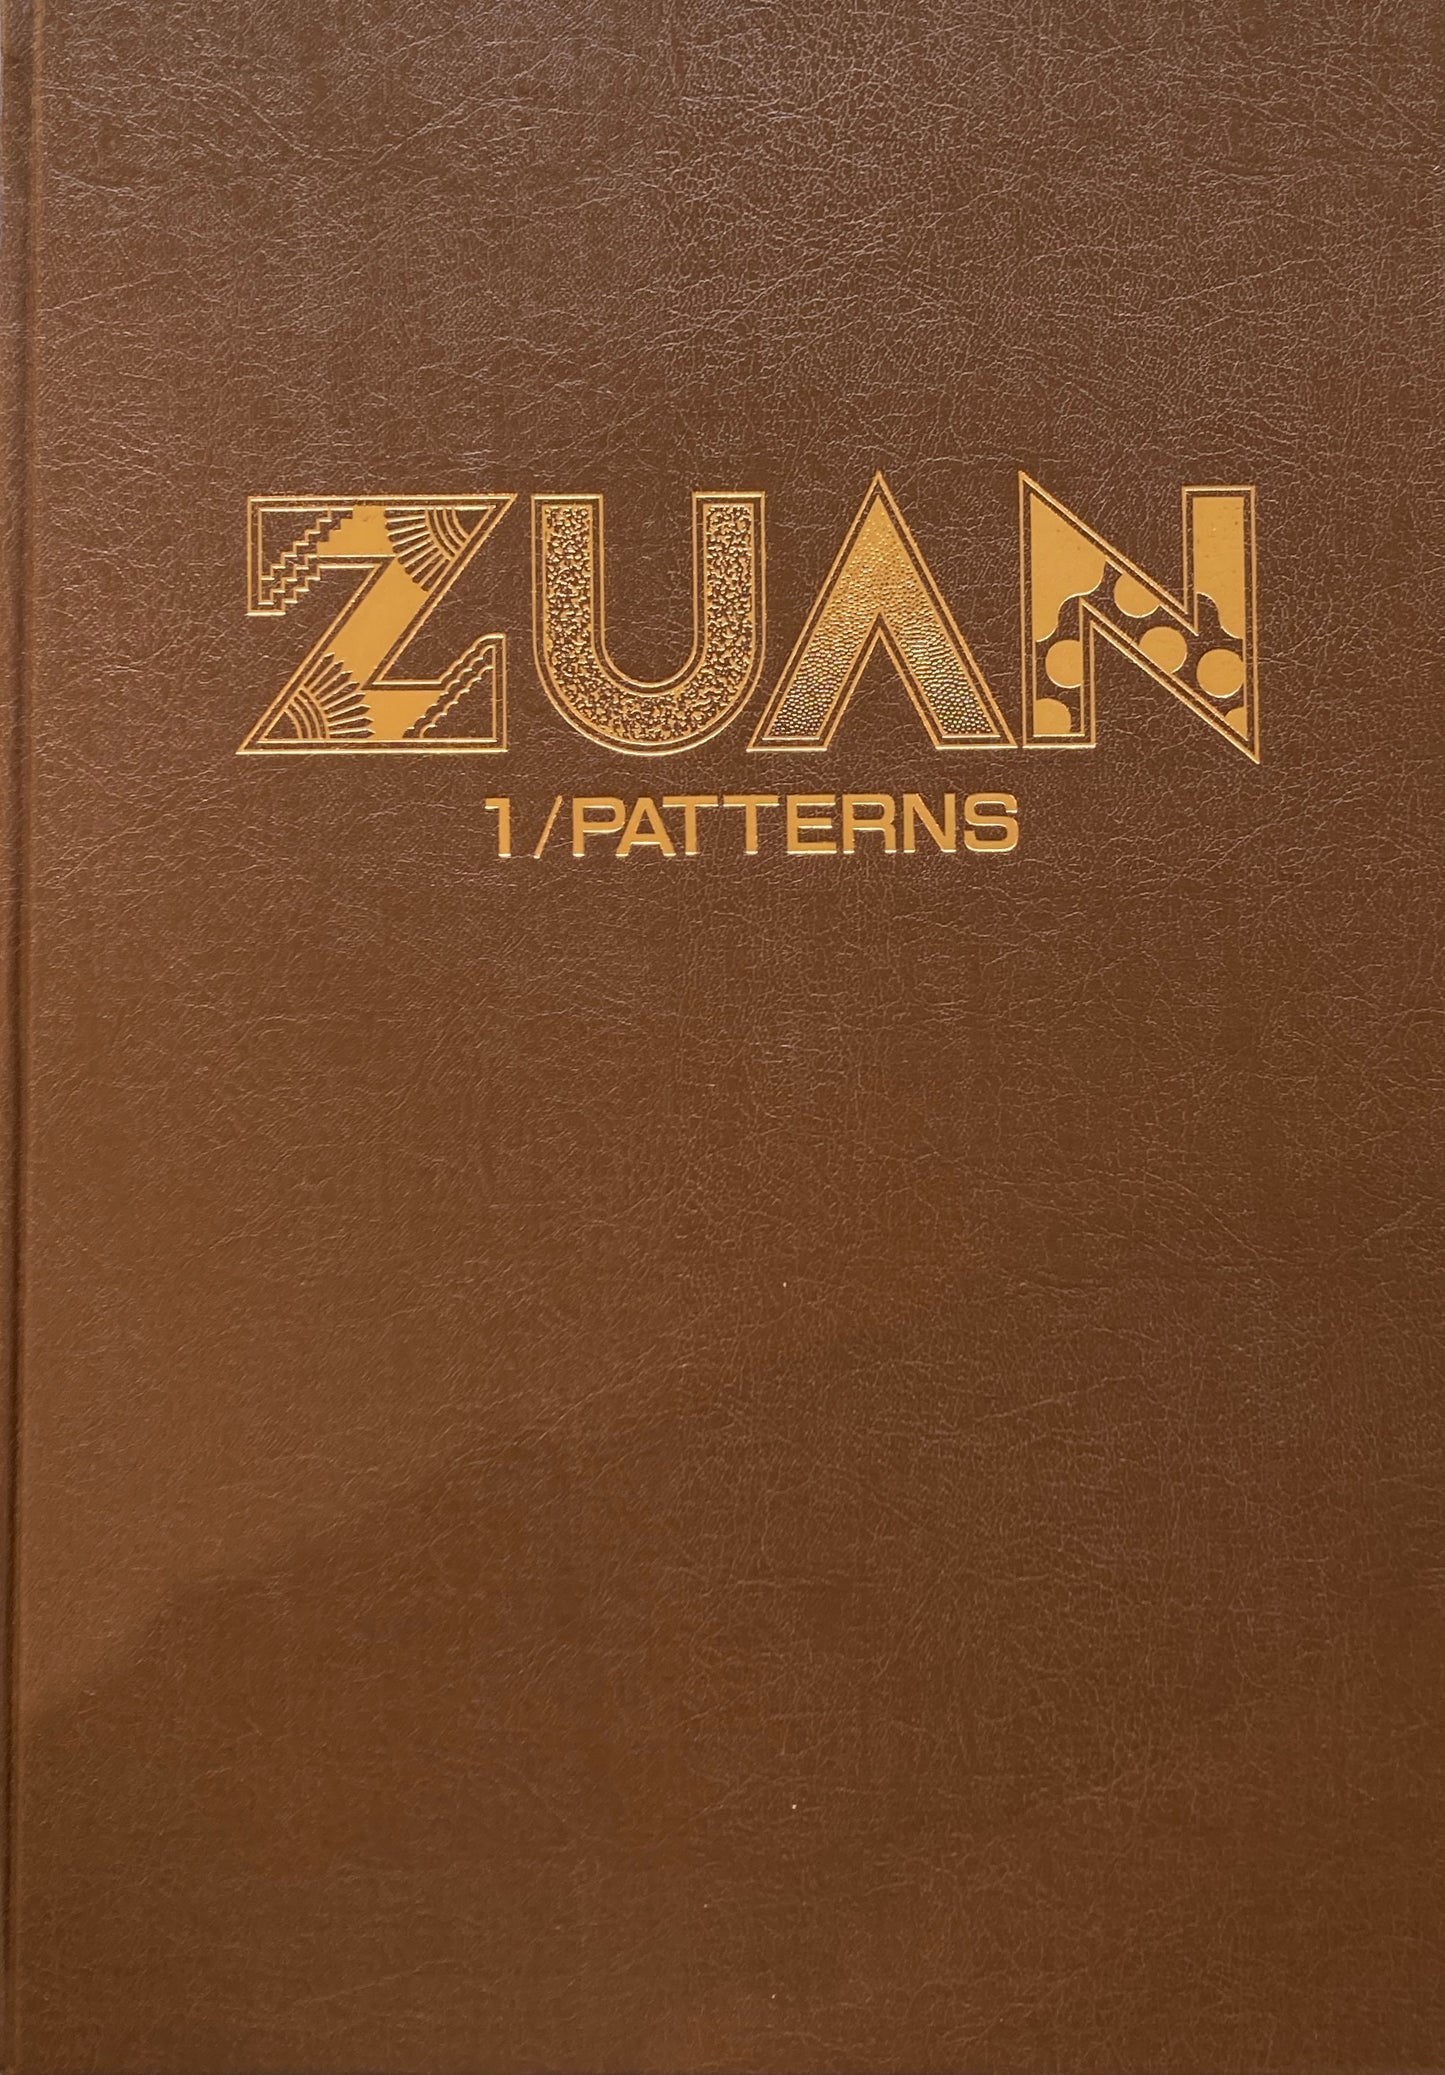 ZUAN Graphic Elements 1/Patterns 2/Illustrations